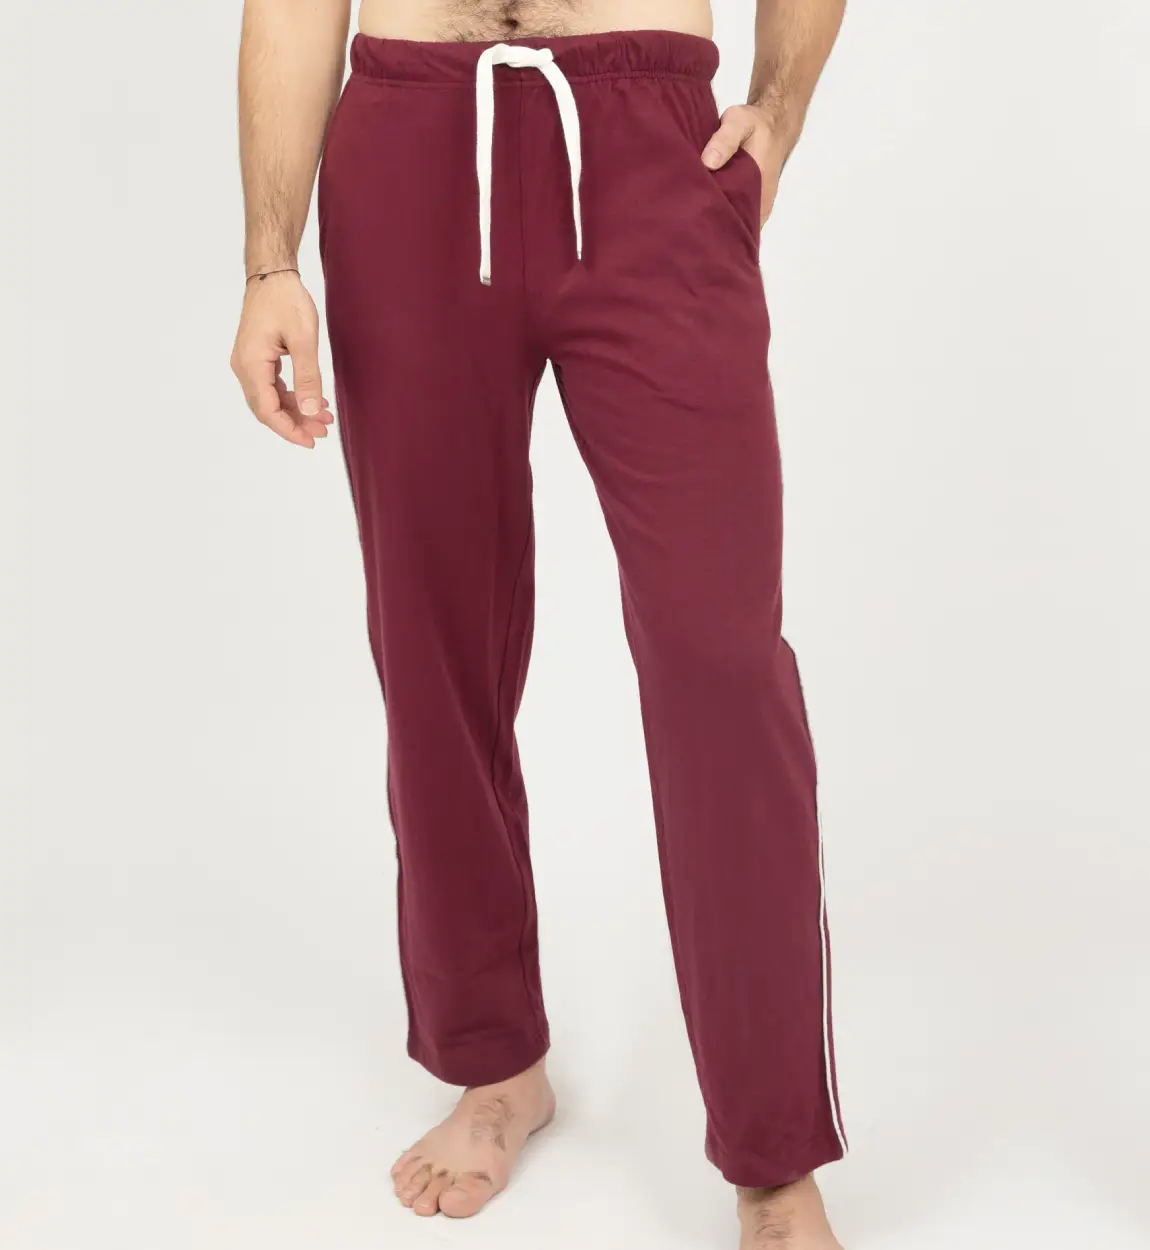 Tendon_Knit_Classic_Pajama_Trouser